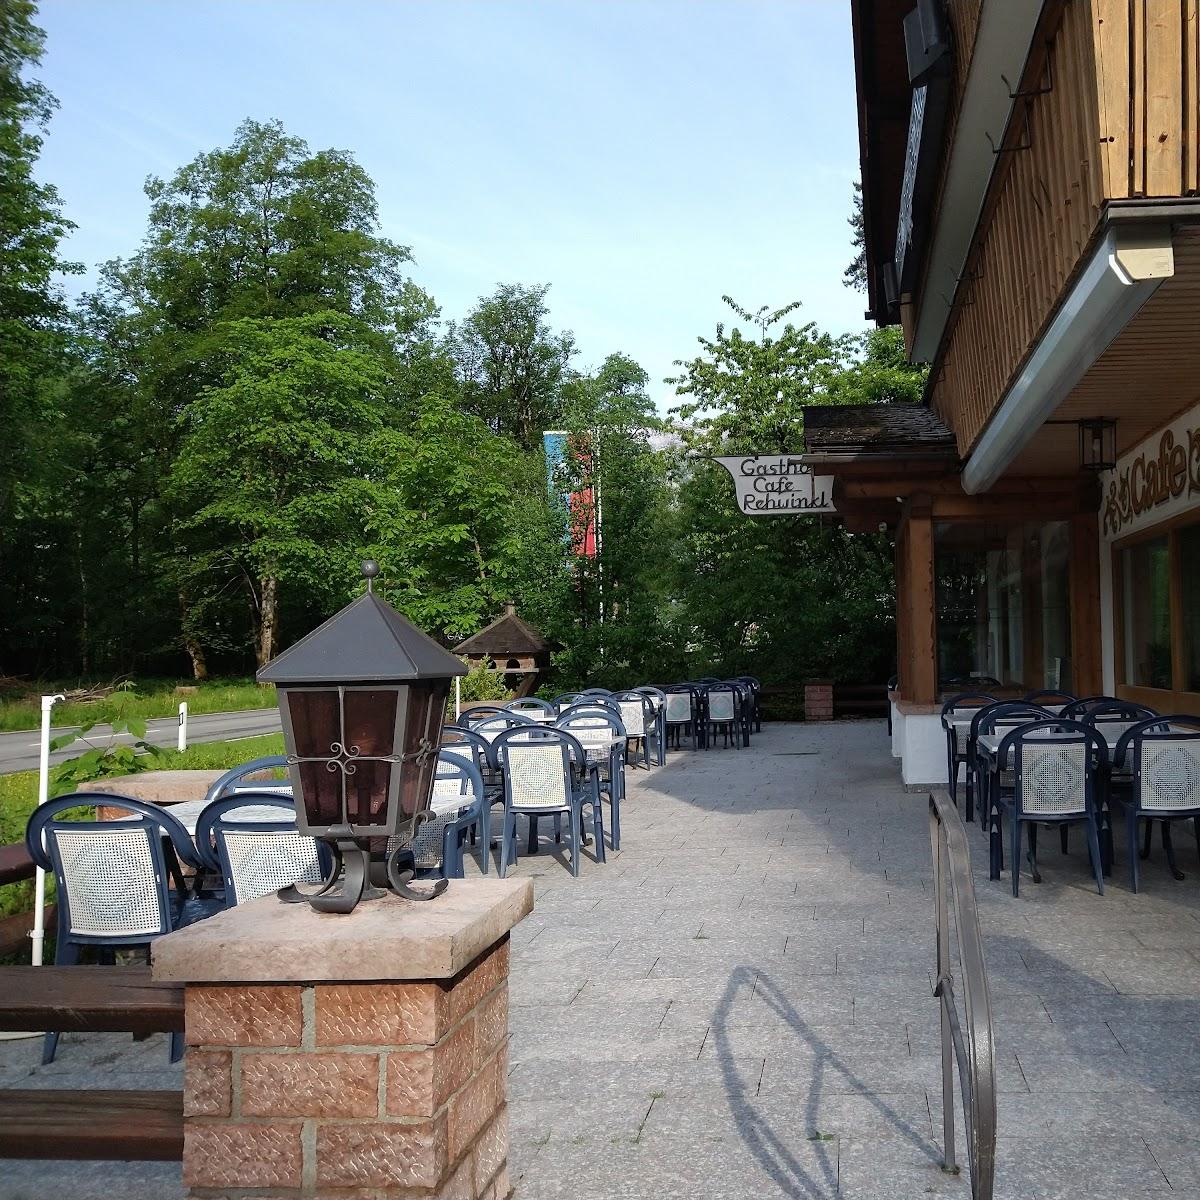 Restaurant "Gasthof Rehwinkl" in Ramsau bei Berchtesgaden